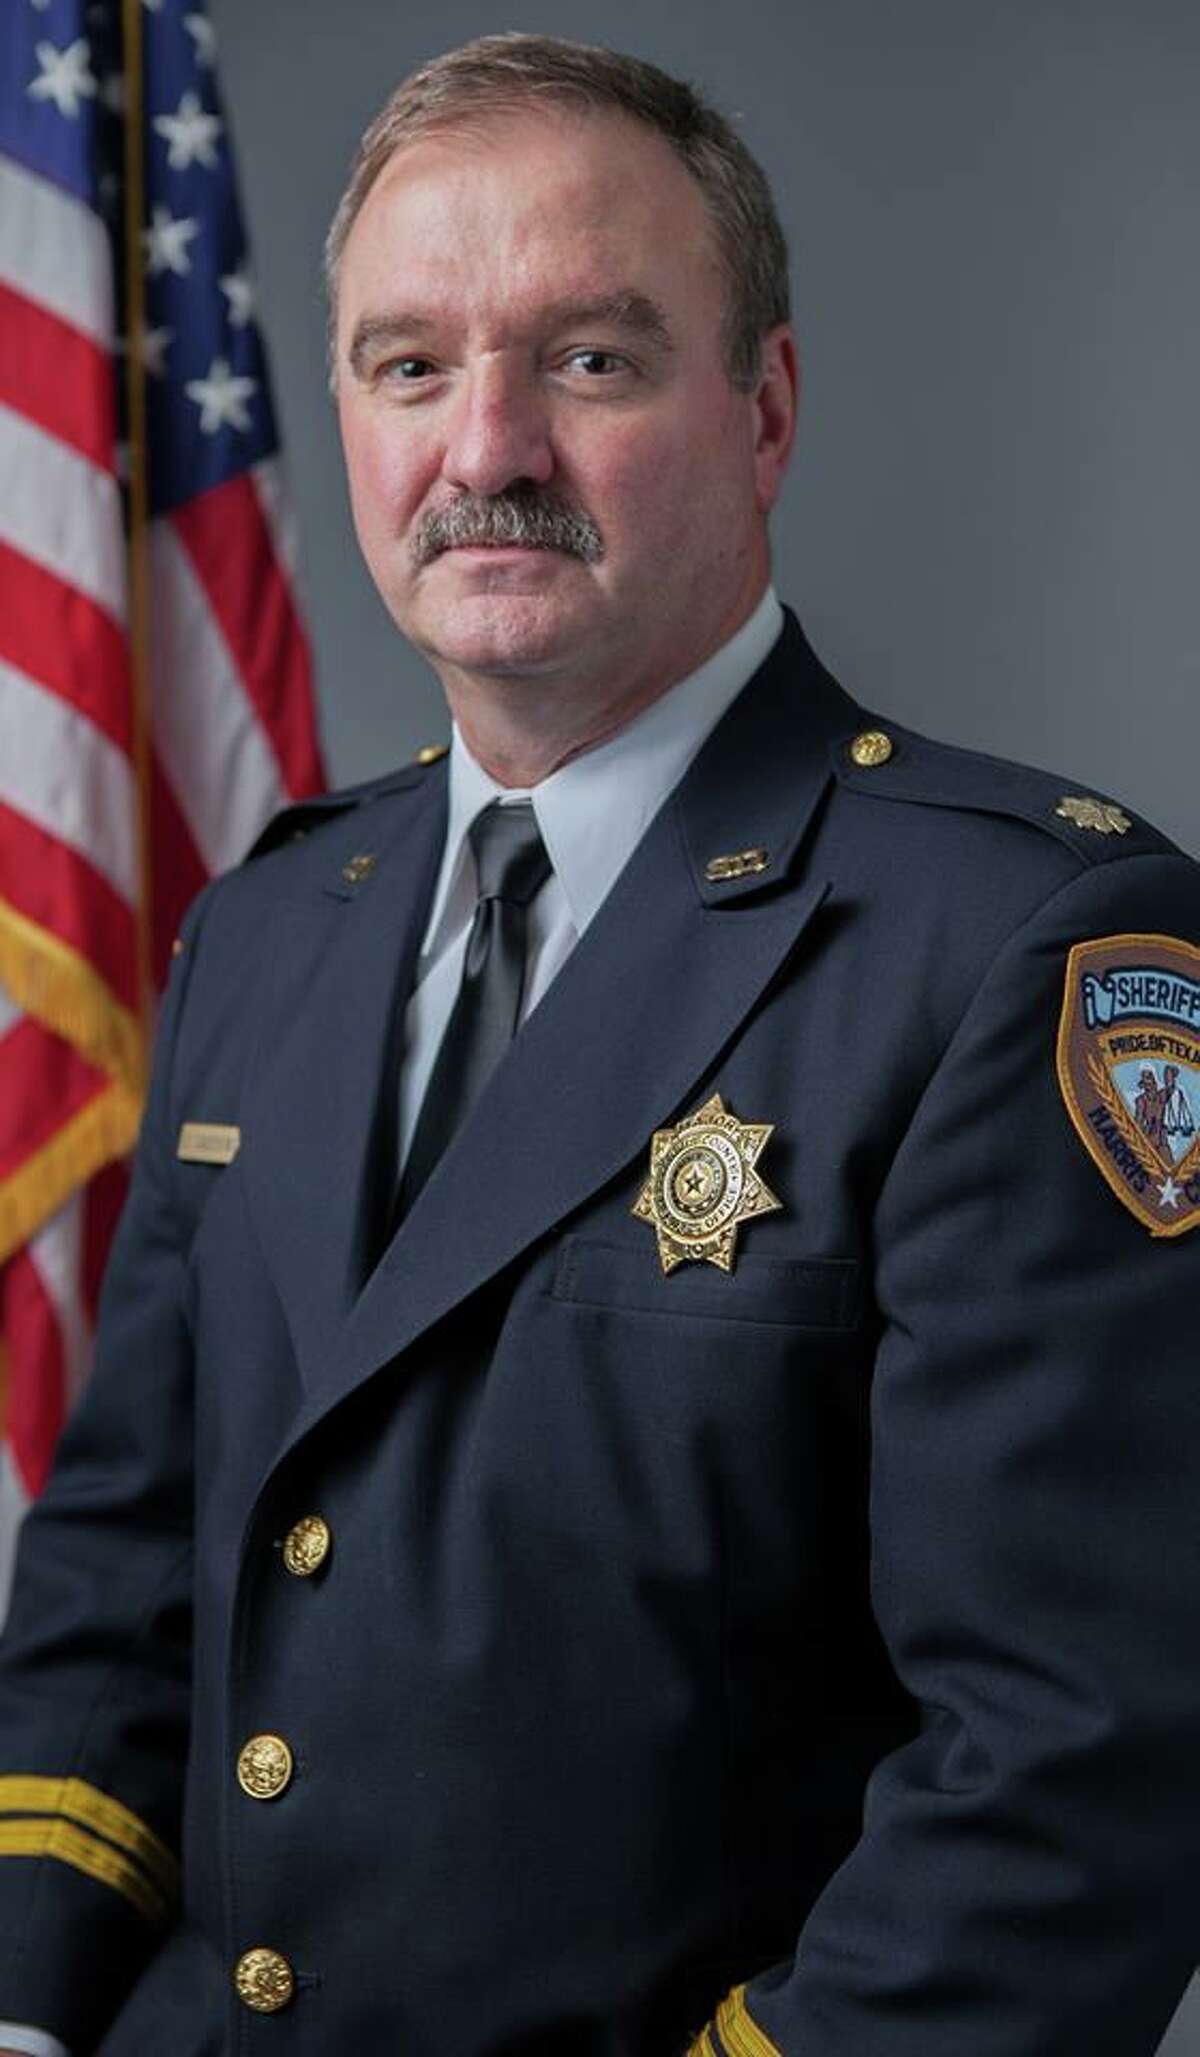 Precinct 3 Assistant Chief Deputy Clint Greenwood